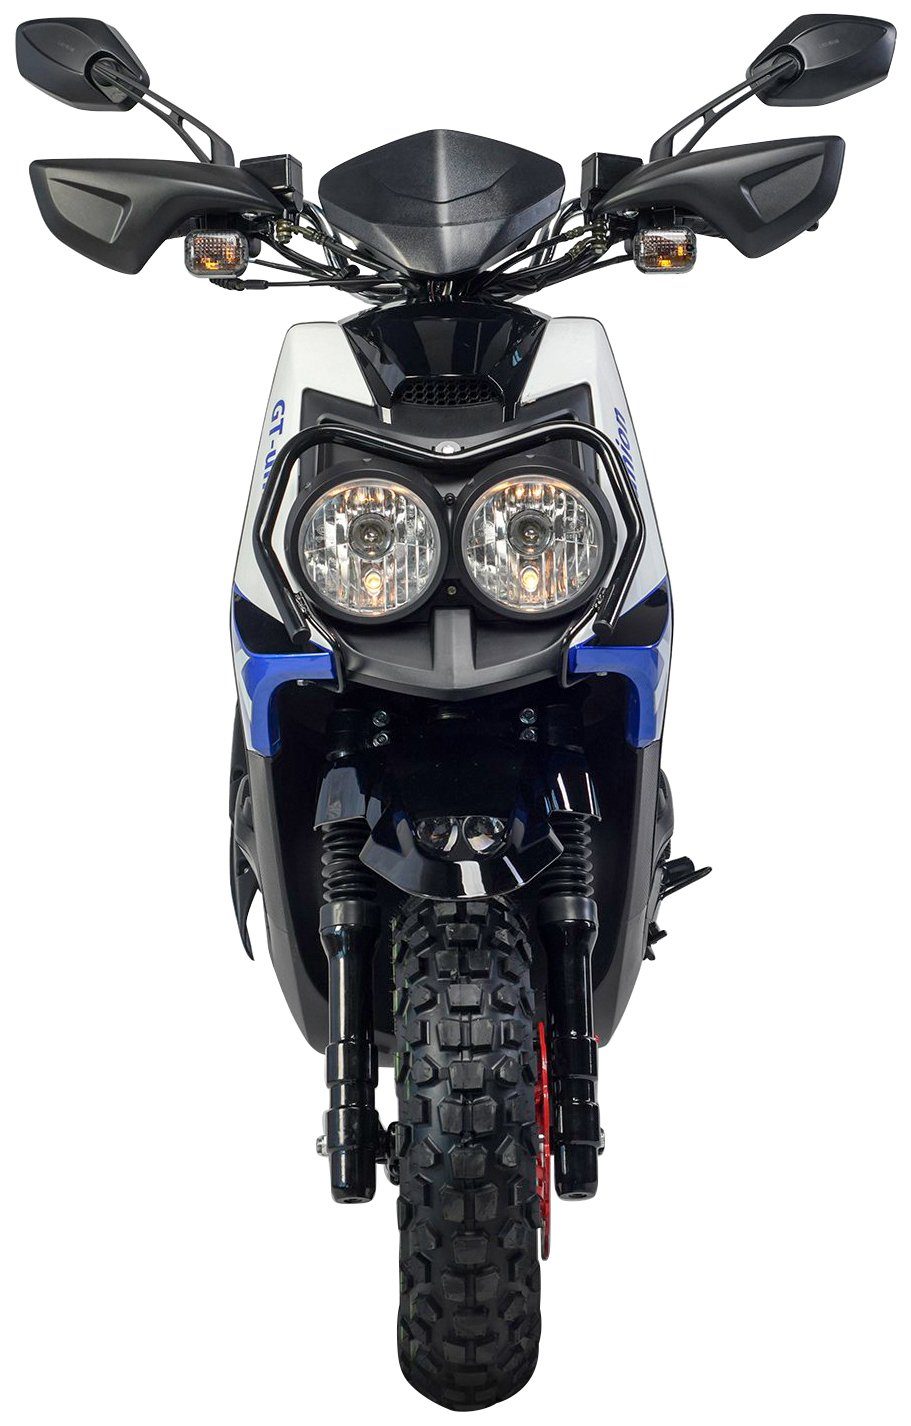 Cross-Concept, Motorroller 55 GT 5 Euro ccm, 125 km/h, weiß/blau/schwarz 85 UNION PX